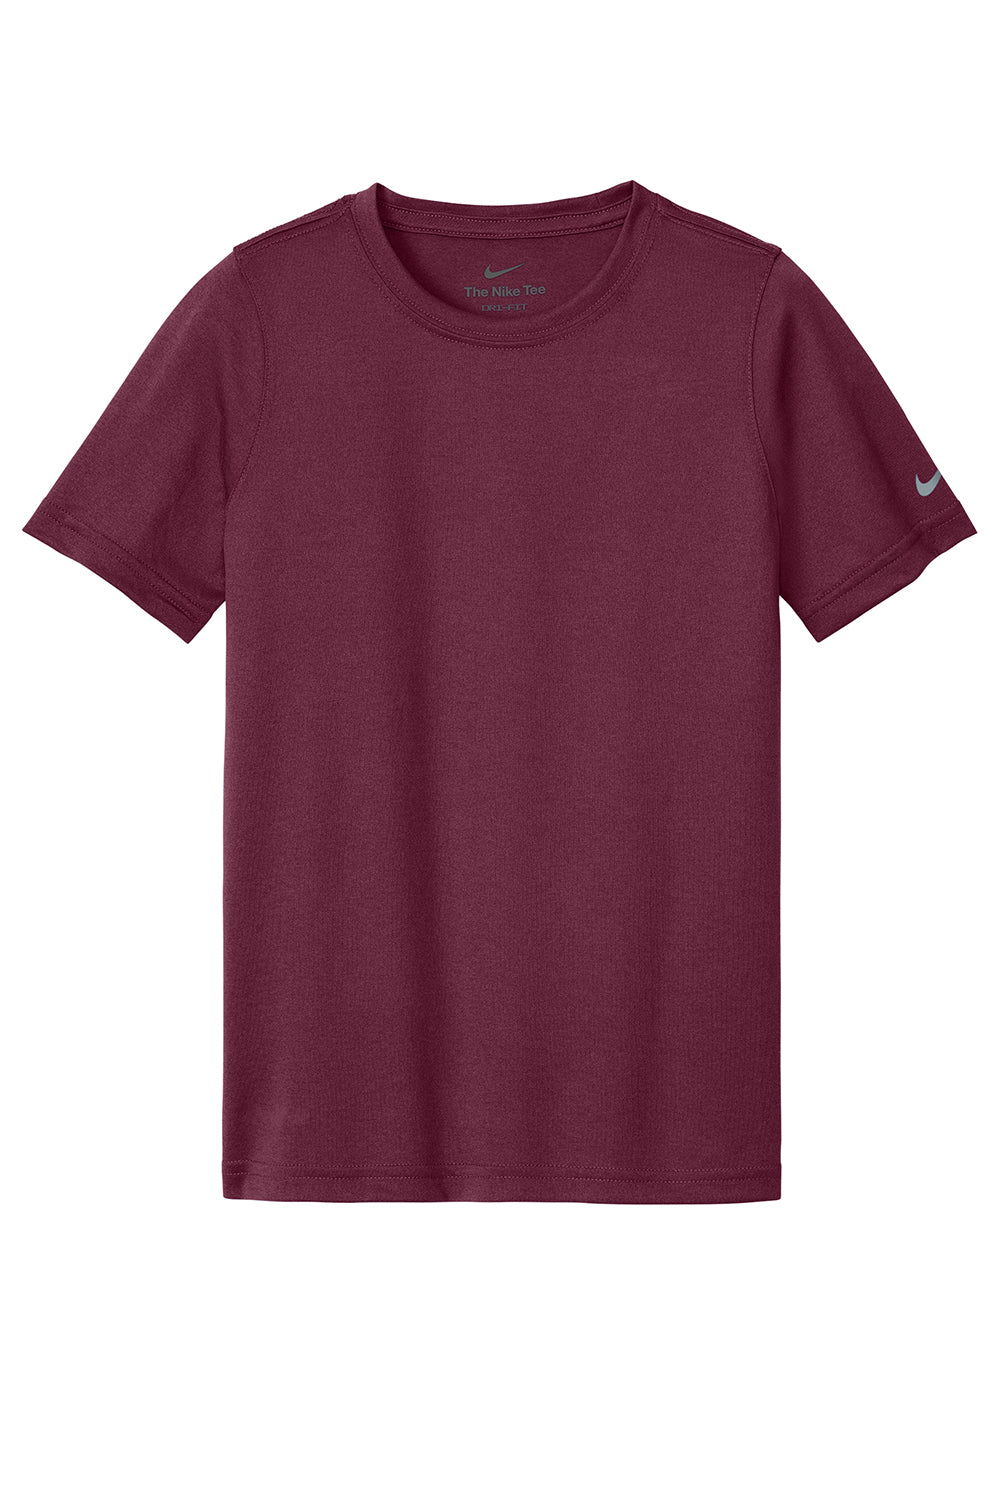 Nike NKDX8787 Youth rLegend Dri-Fit Moisture Wicking Short Sleeve Crewneck T-Shirt Deep Maroon Flat Front